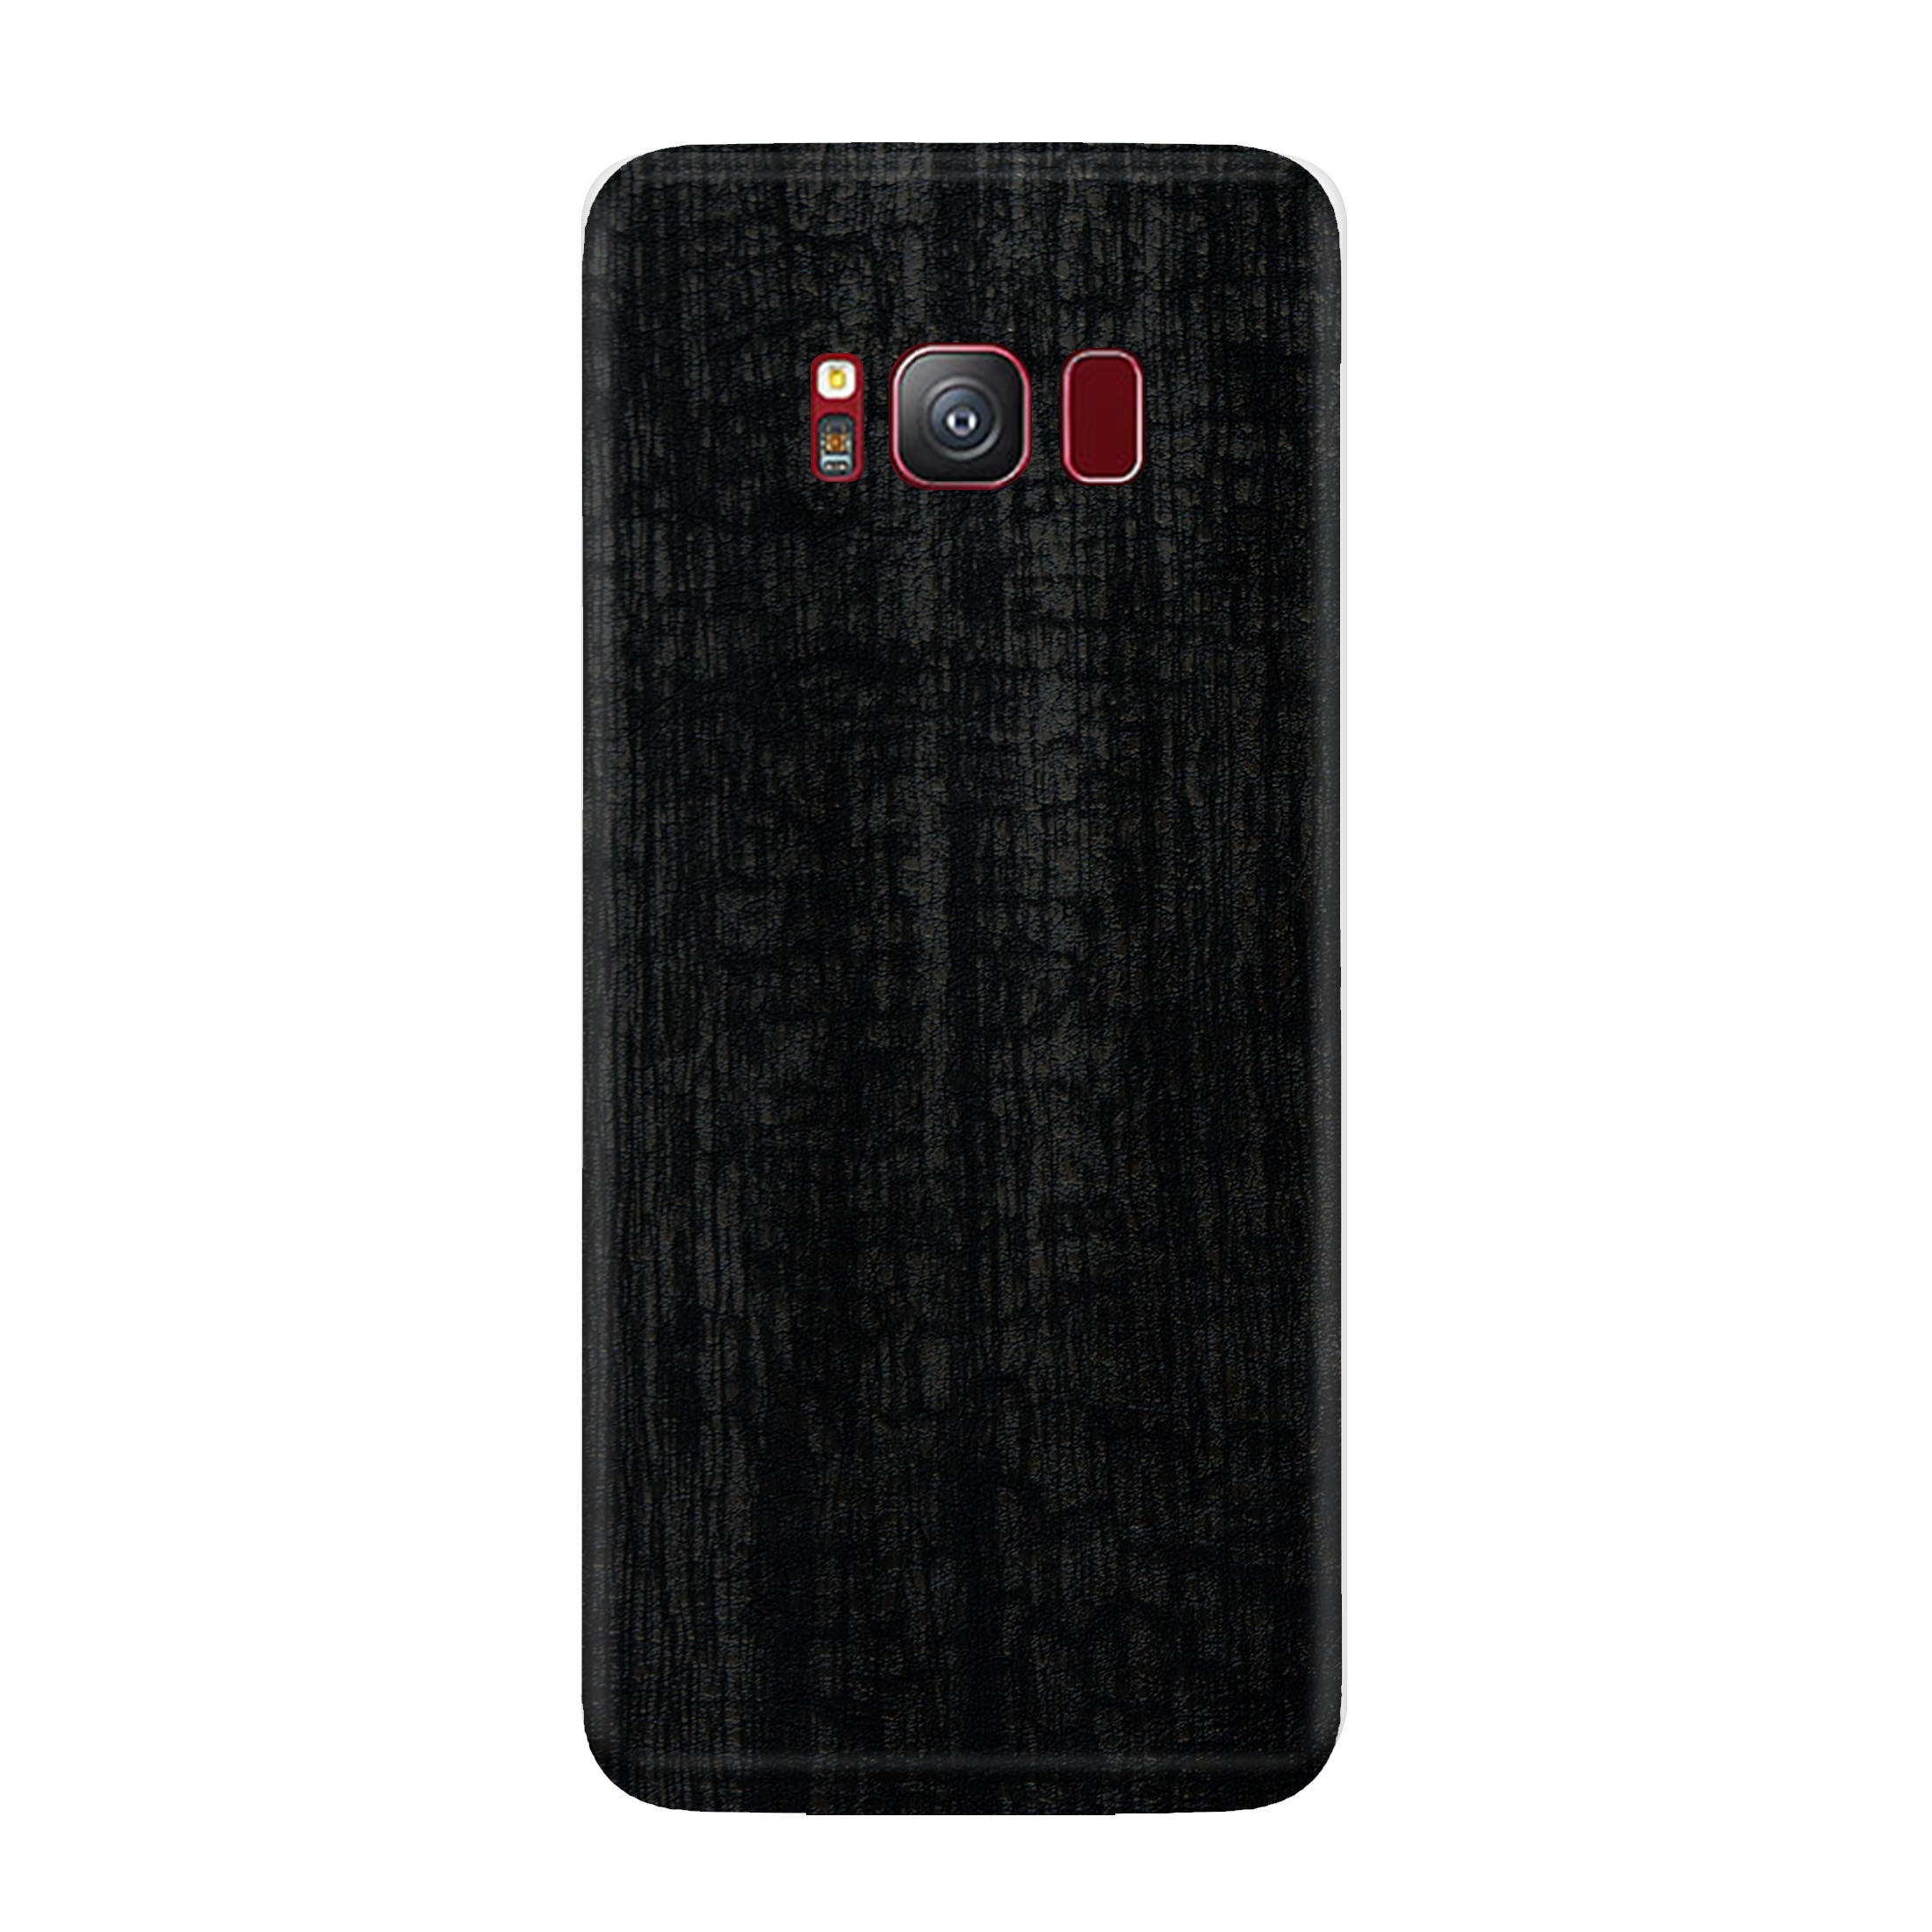 Dragon Black Skin for Samsung S8 Plus